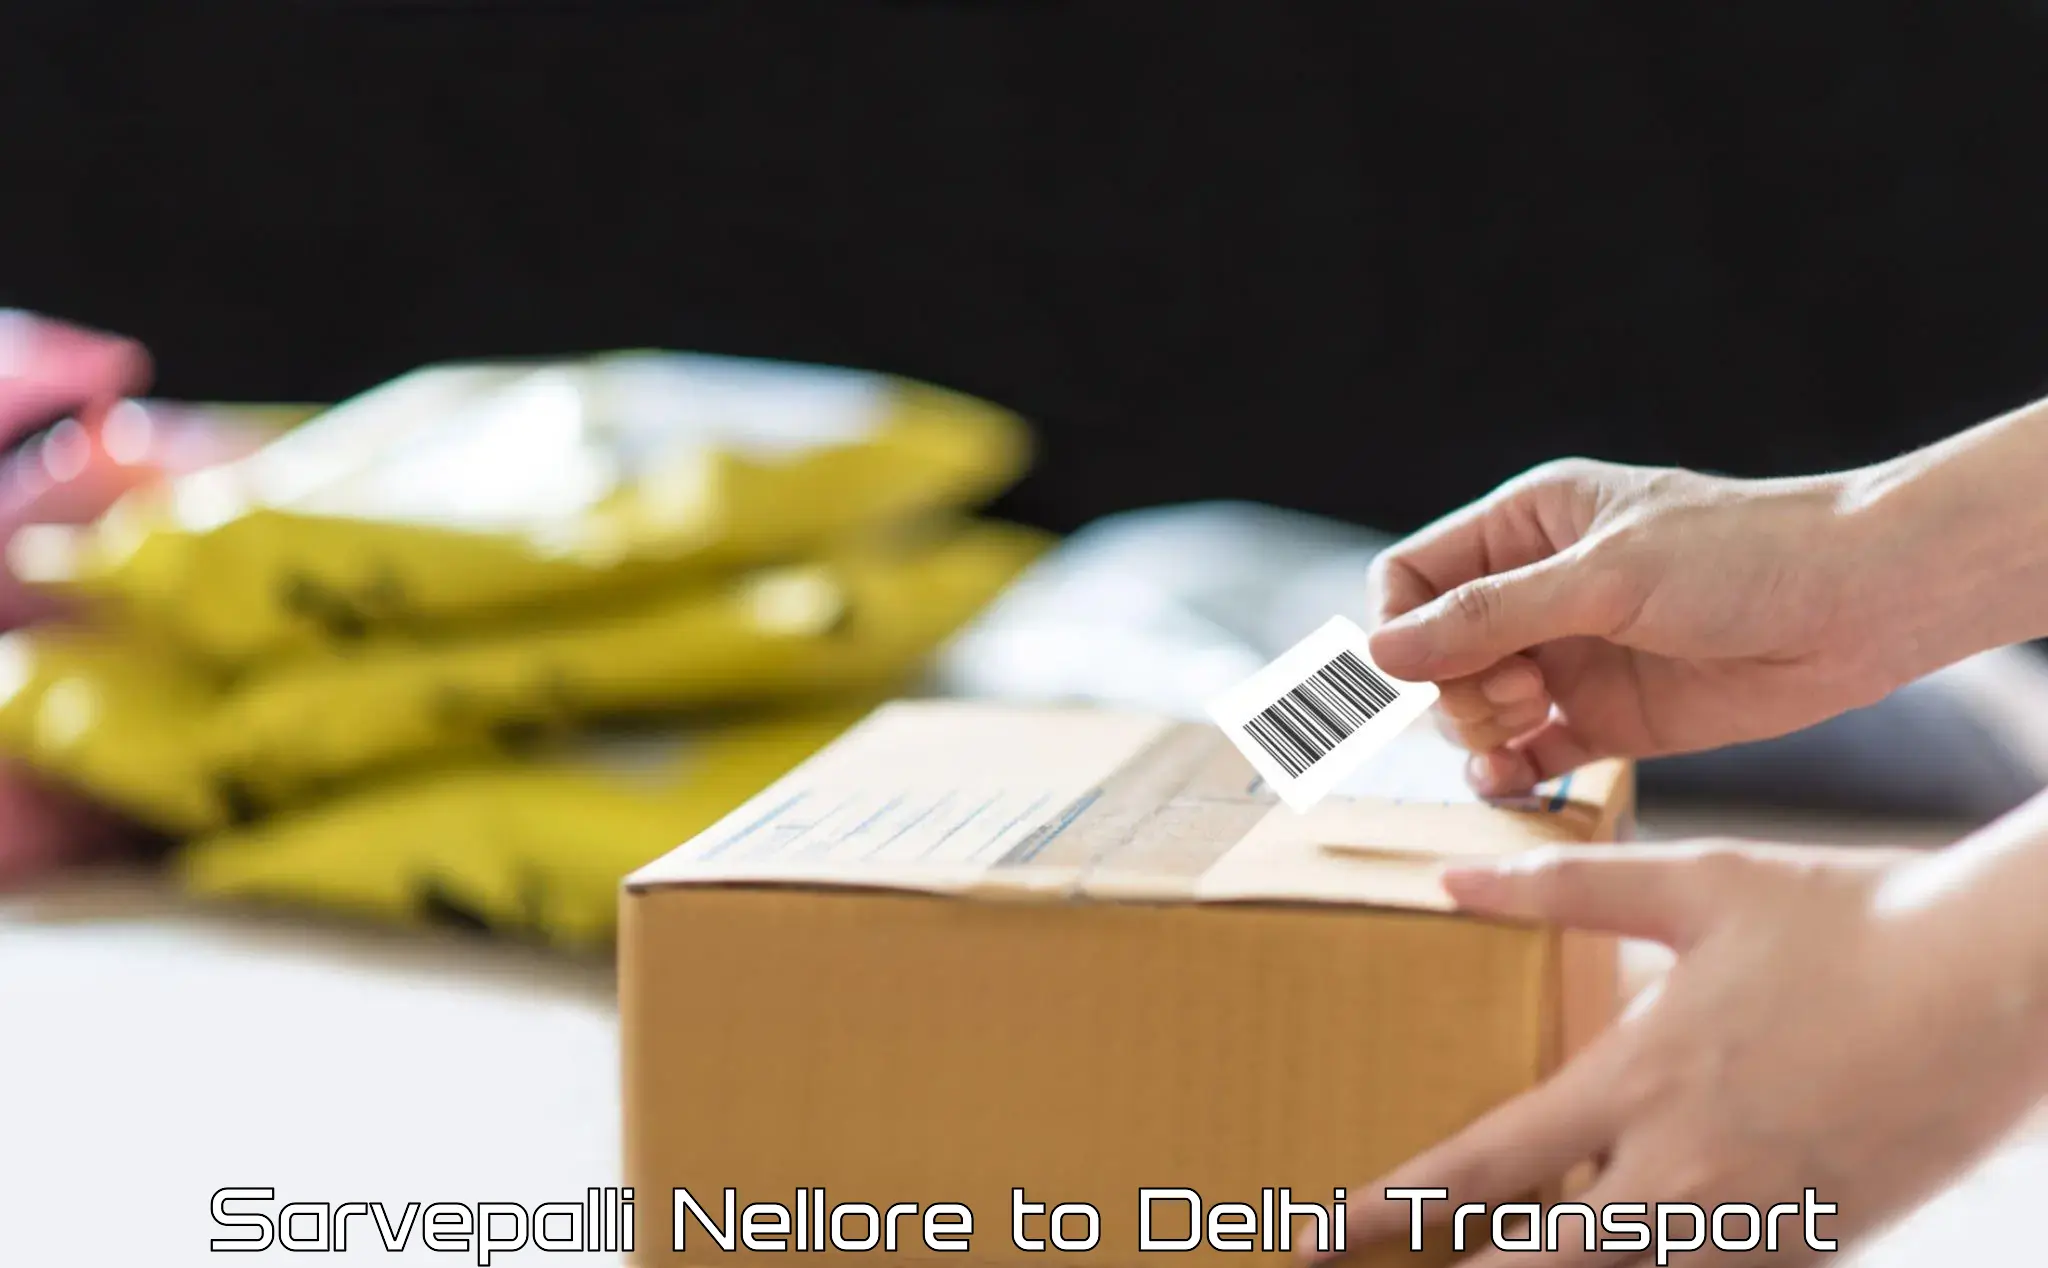 Nearest transport service Sarvepalli Nellore to University of Delhi